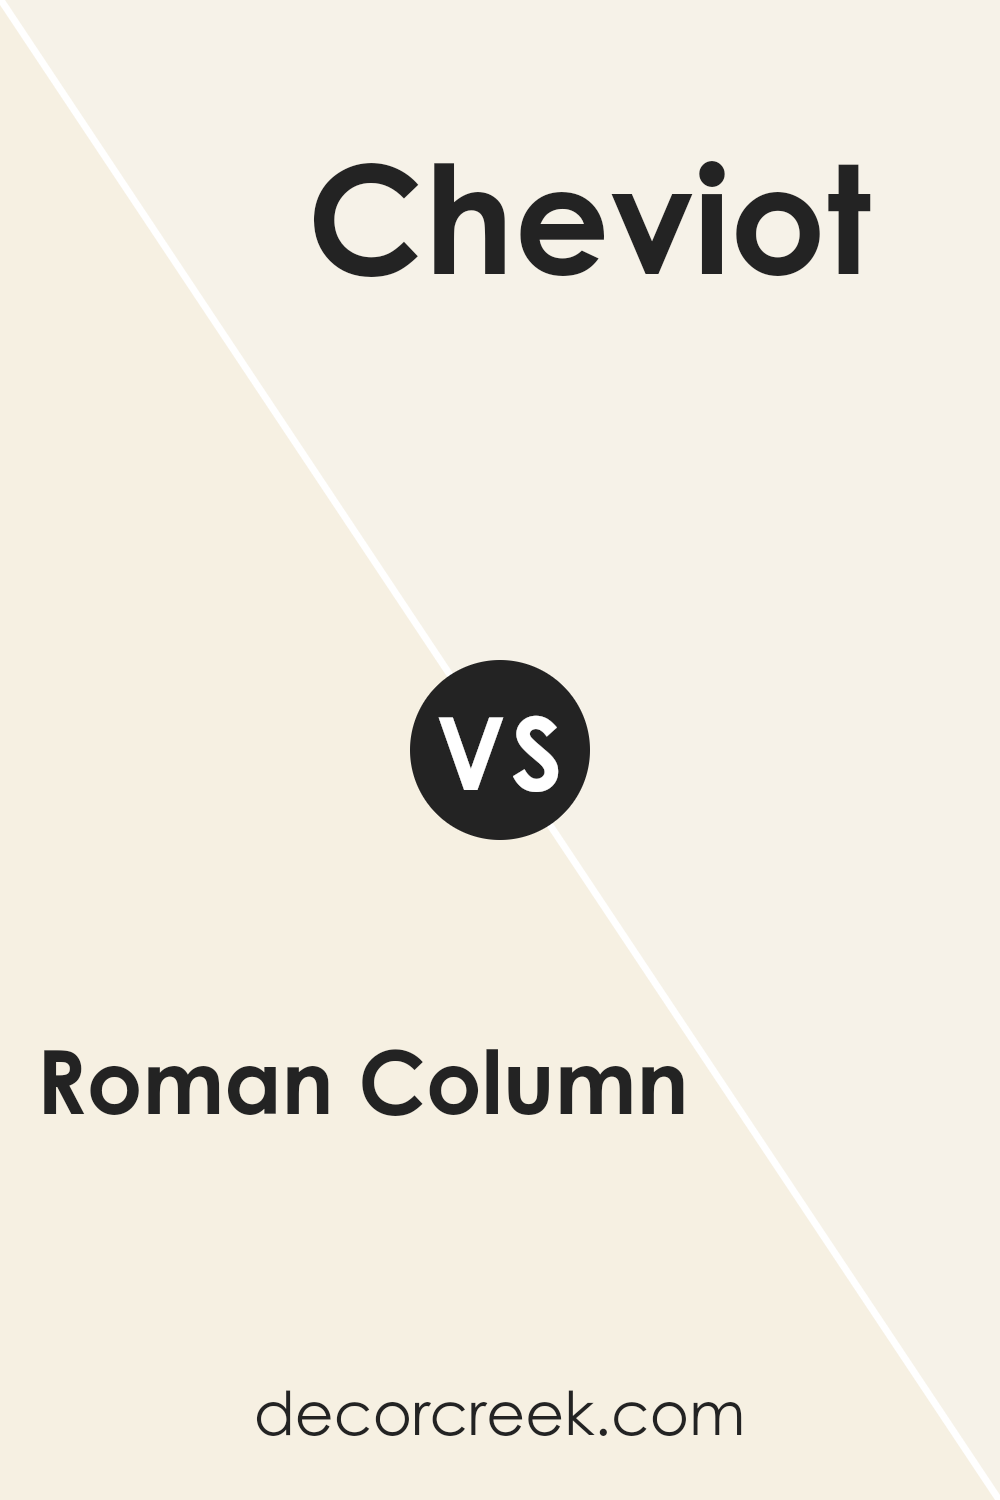 roman_column_sw_7562_vs_cheviot_sw_9503